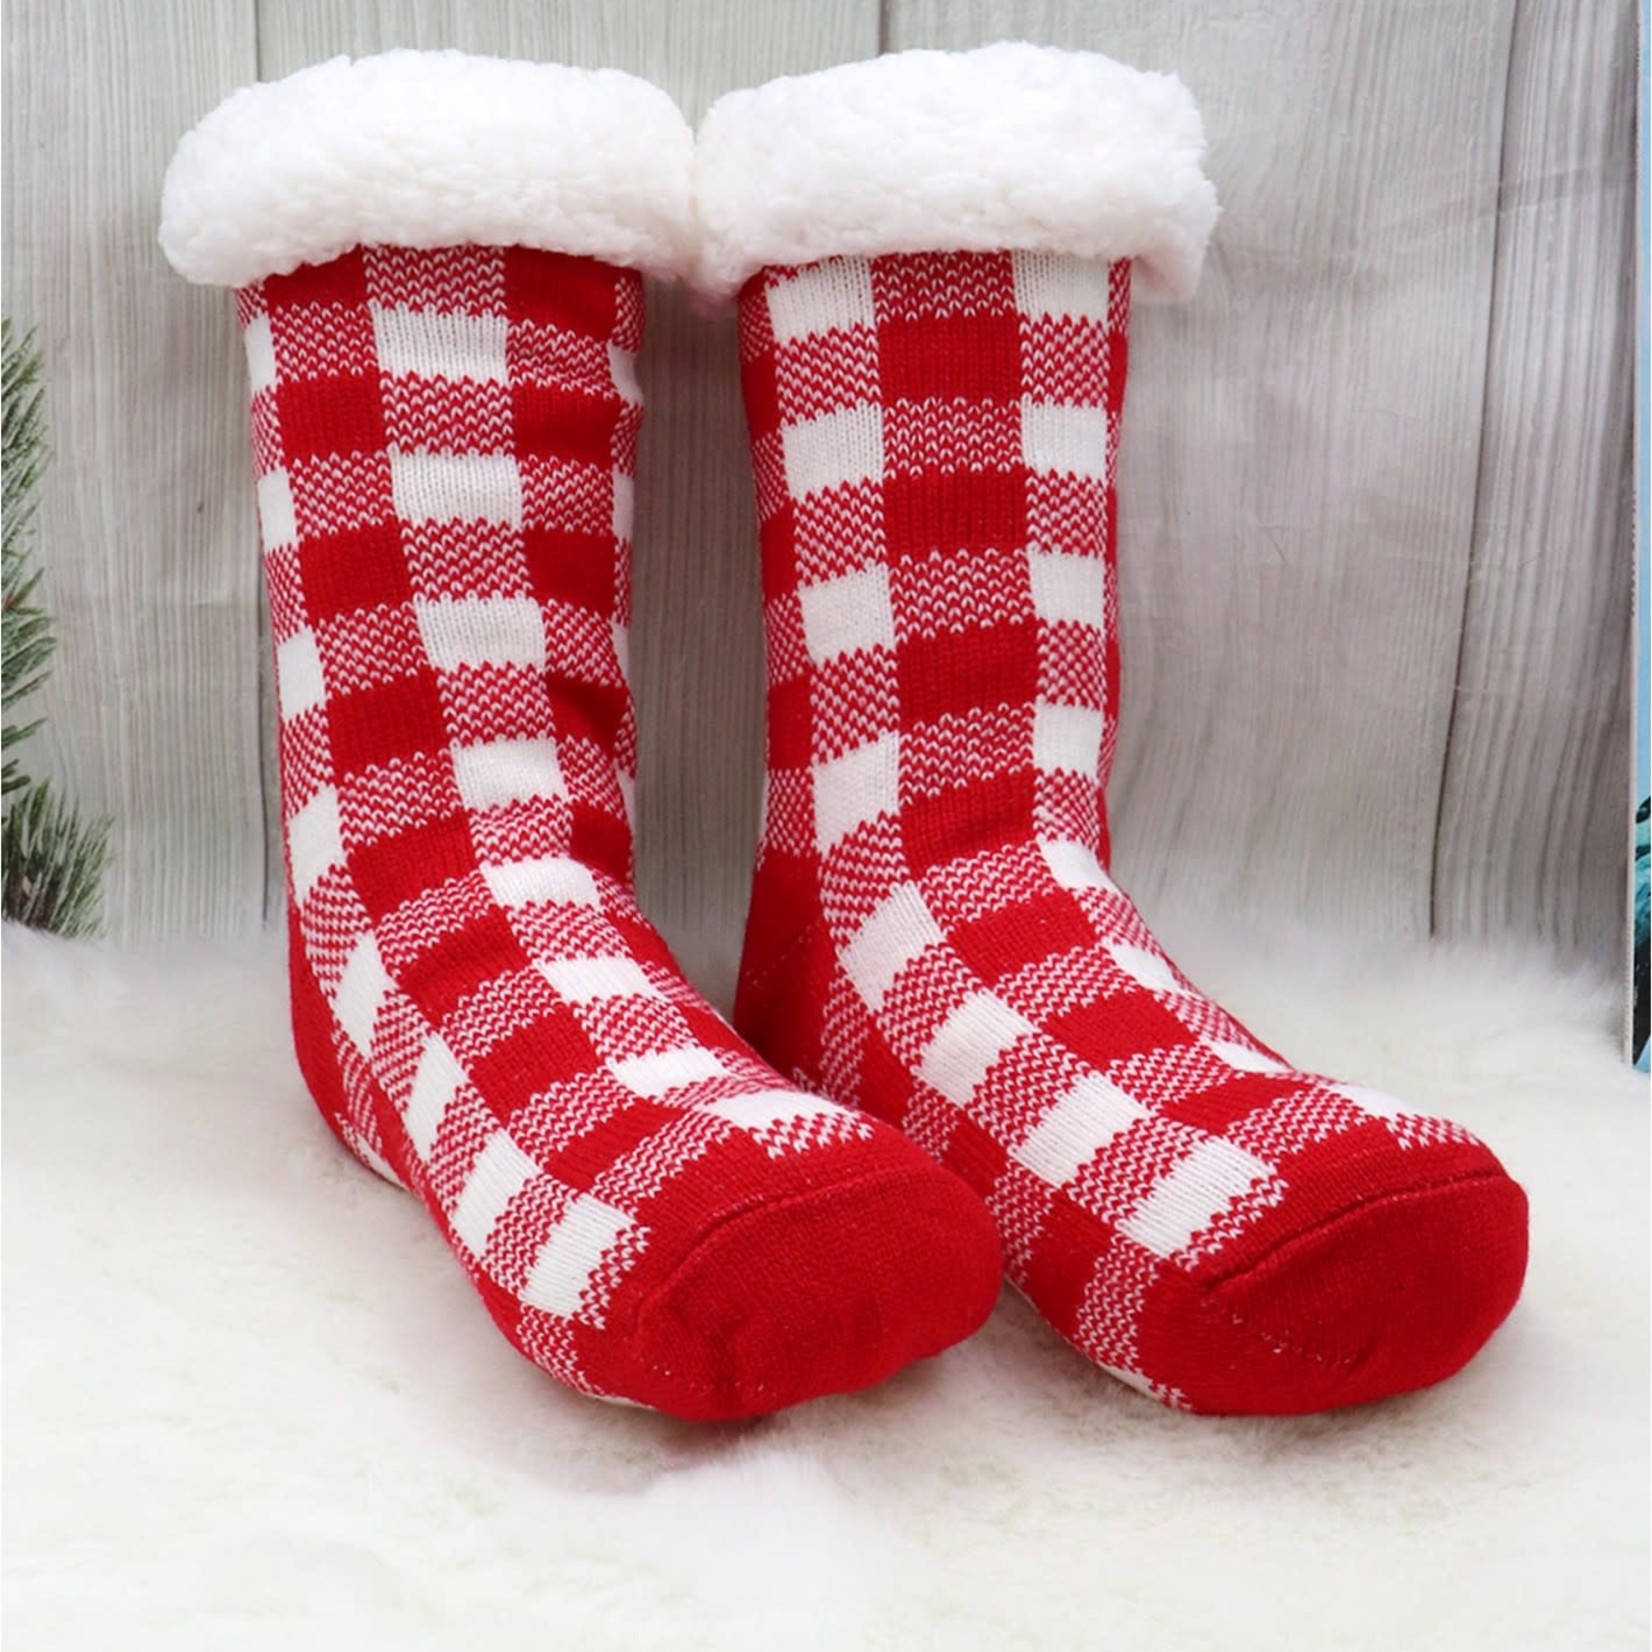 Plaid Indoor Anti-Skid Slipper Socks Red/White